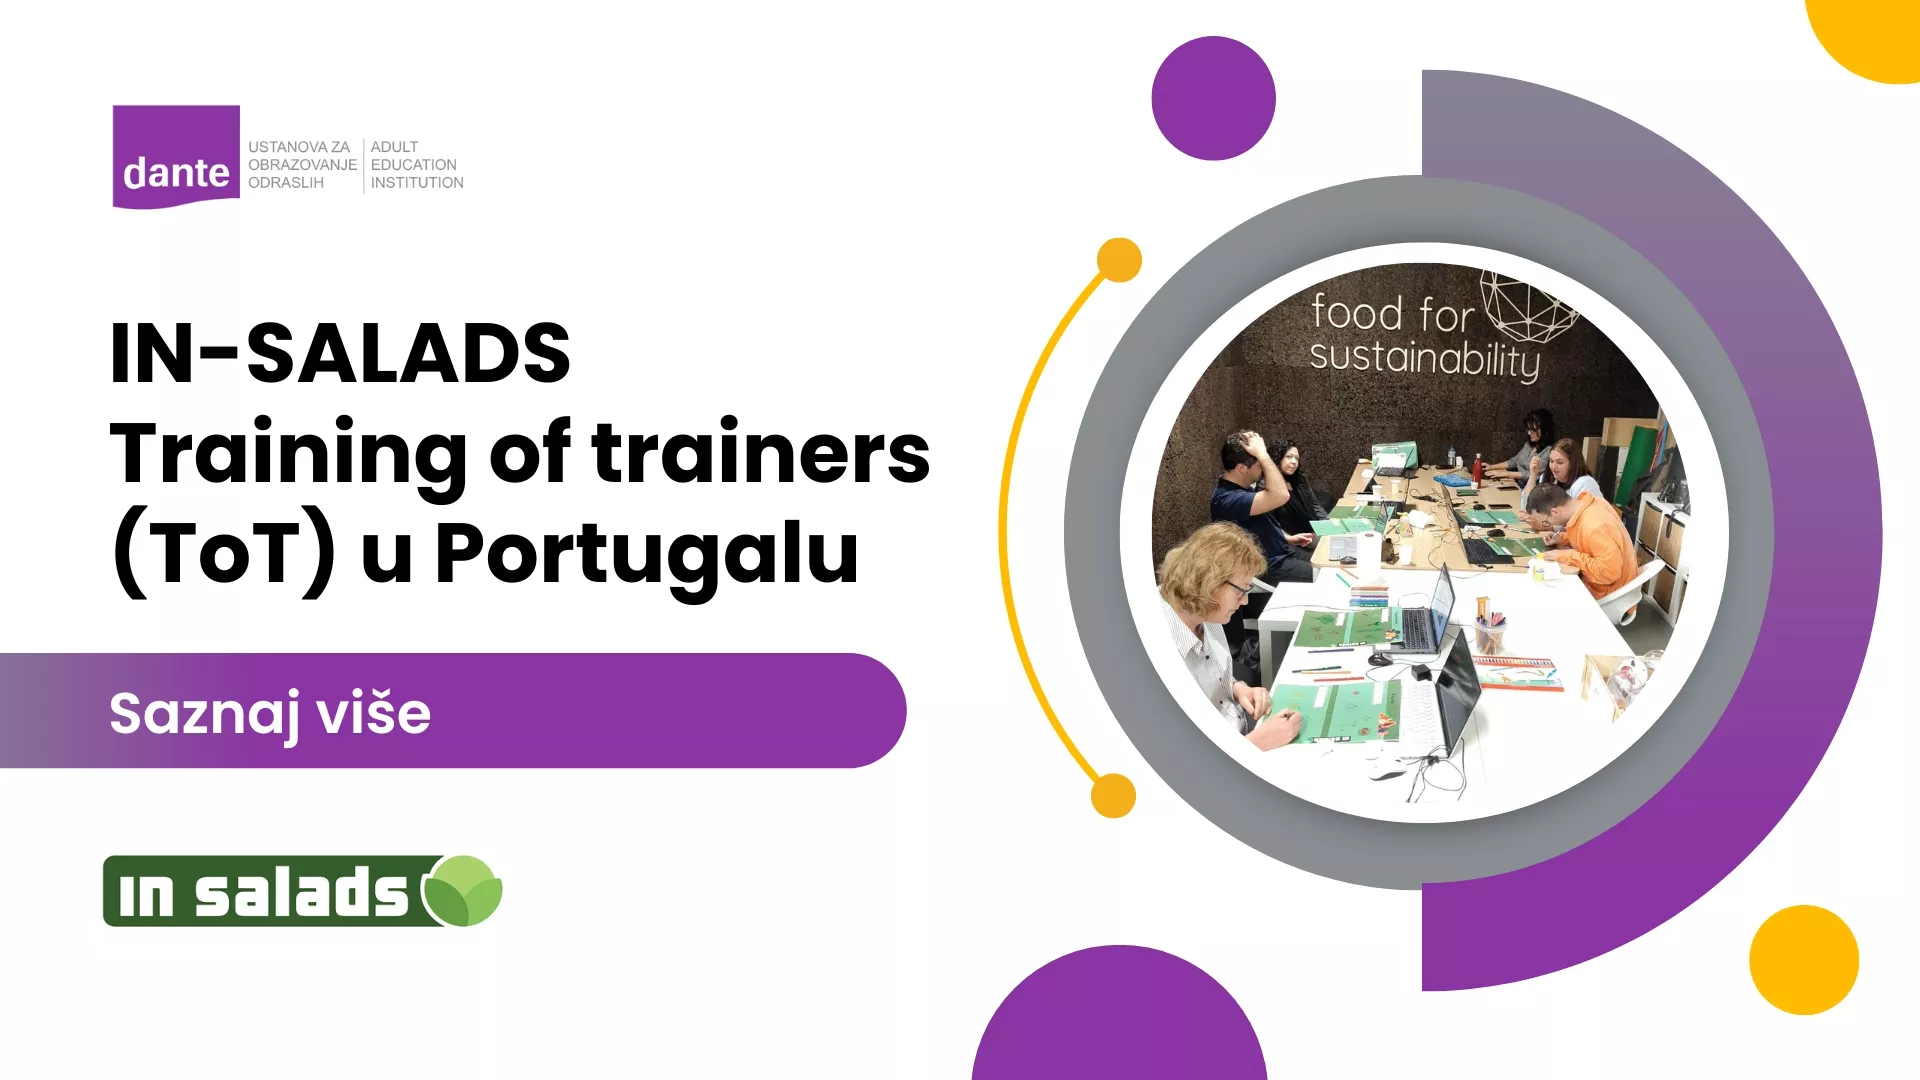 In-salads Training of trainers u Portugalu.